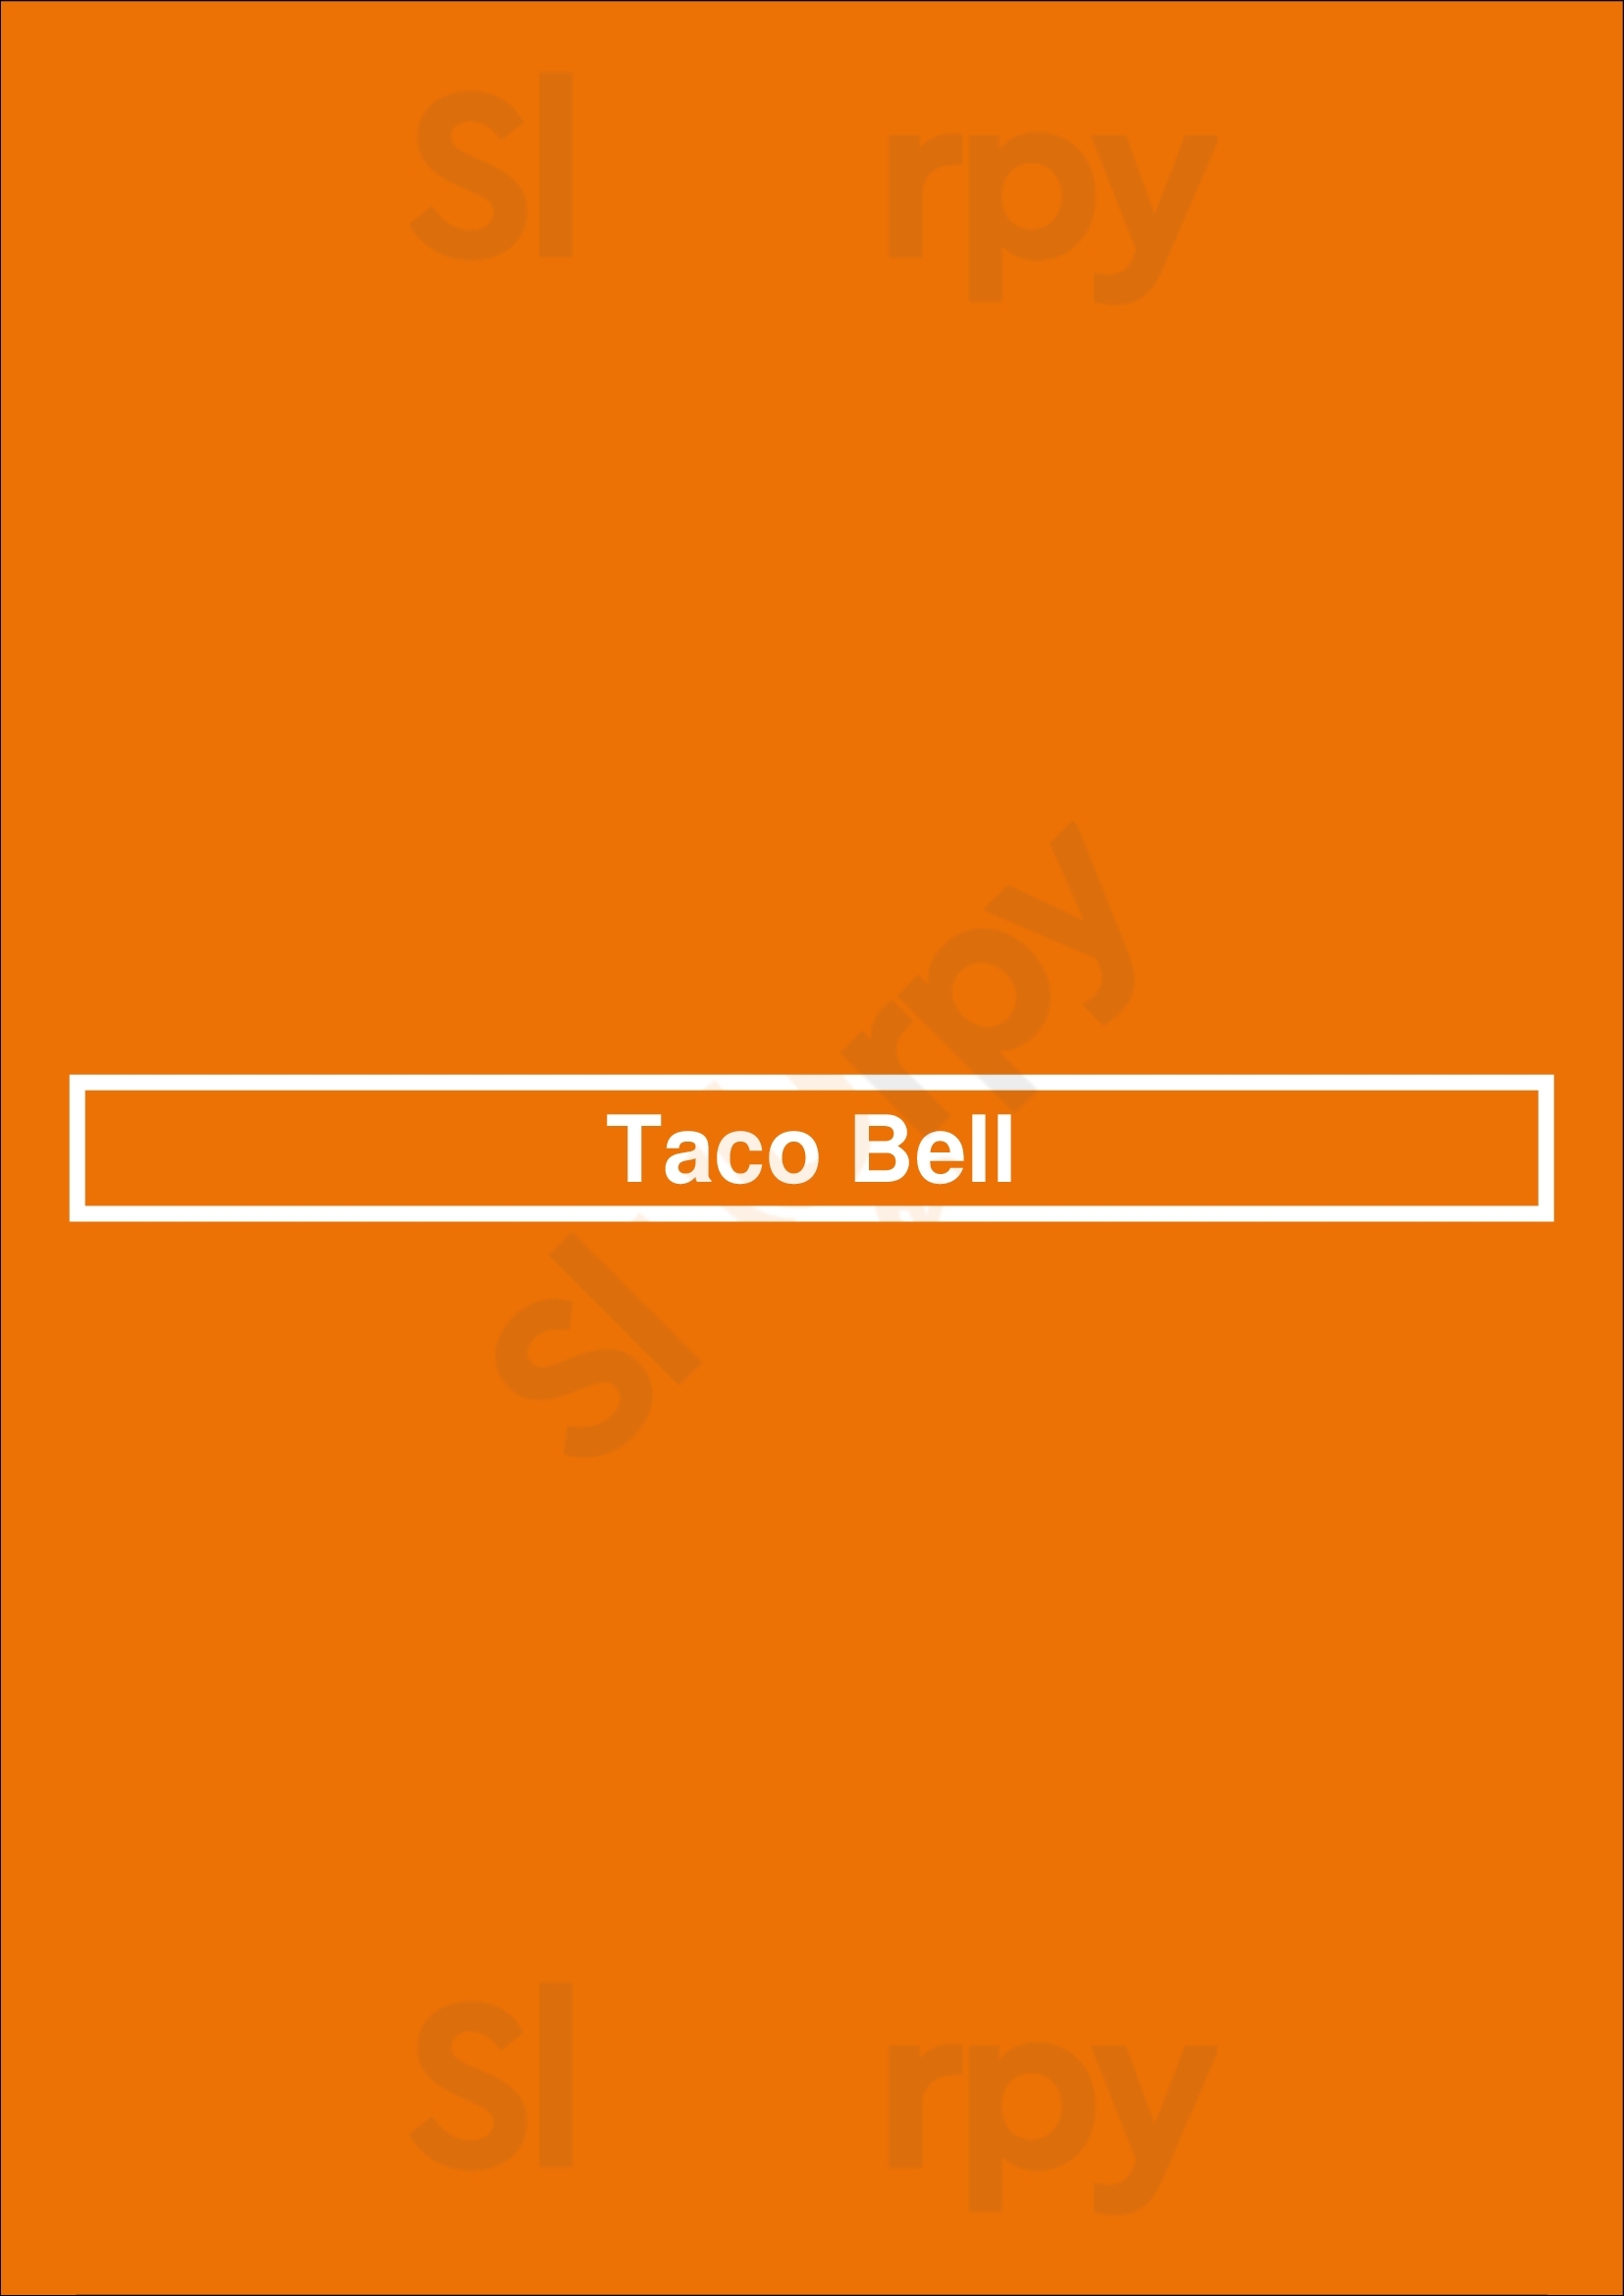 Taco Bell Houston Menu - 1